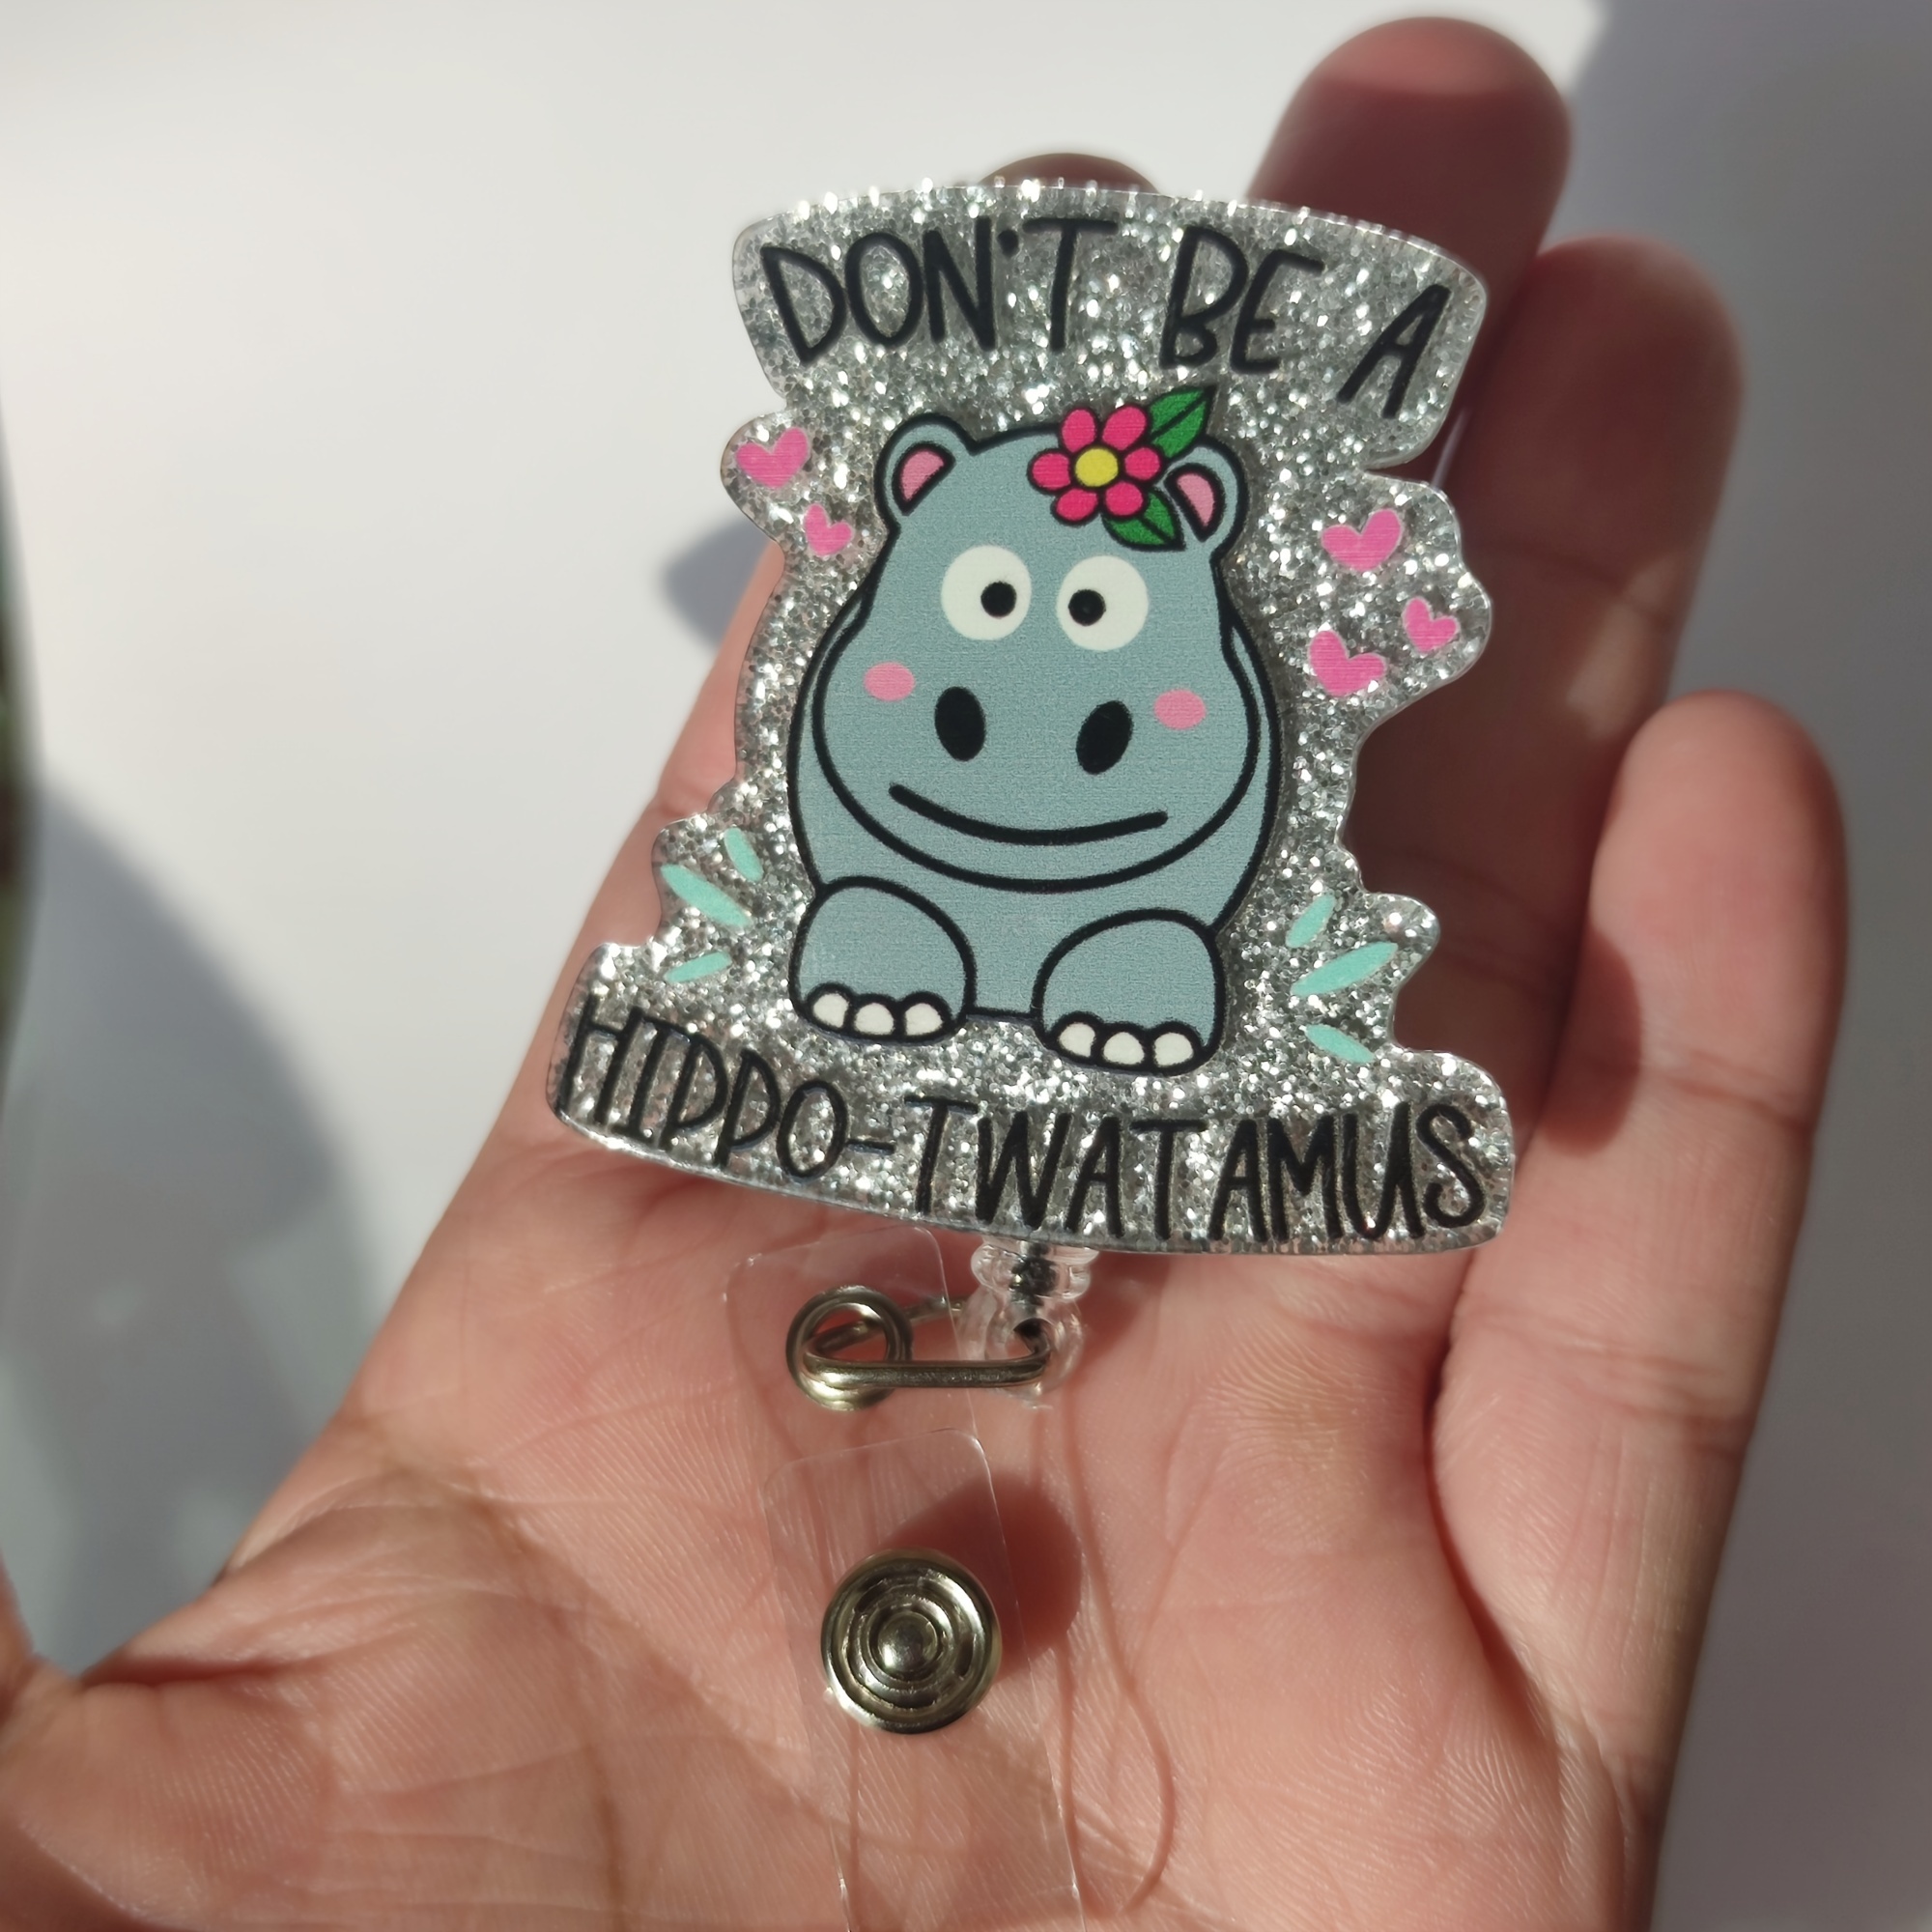 Don't A Hippo twatamus Retractable Badge Reel Clip Cute - Temu